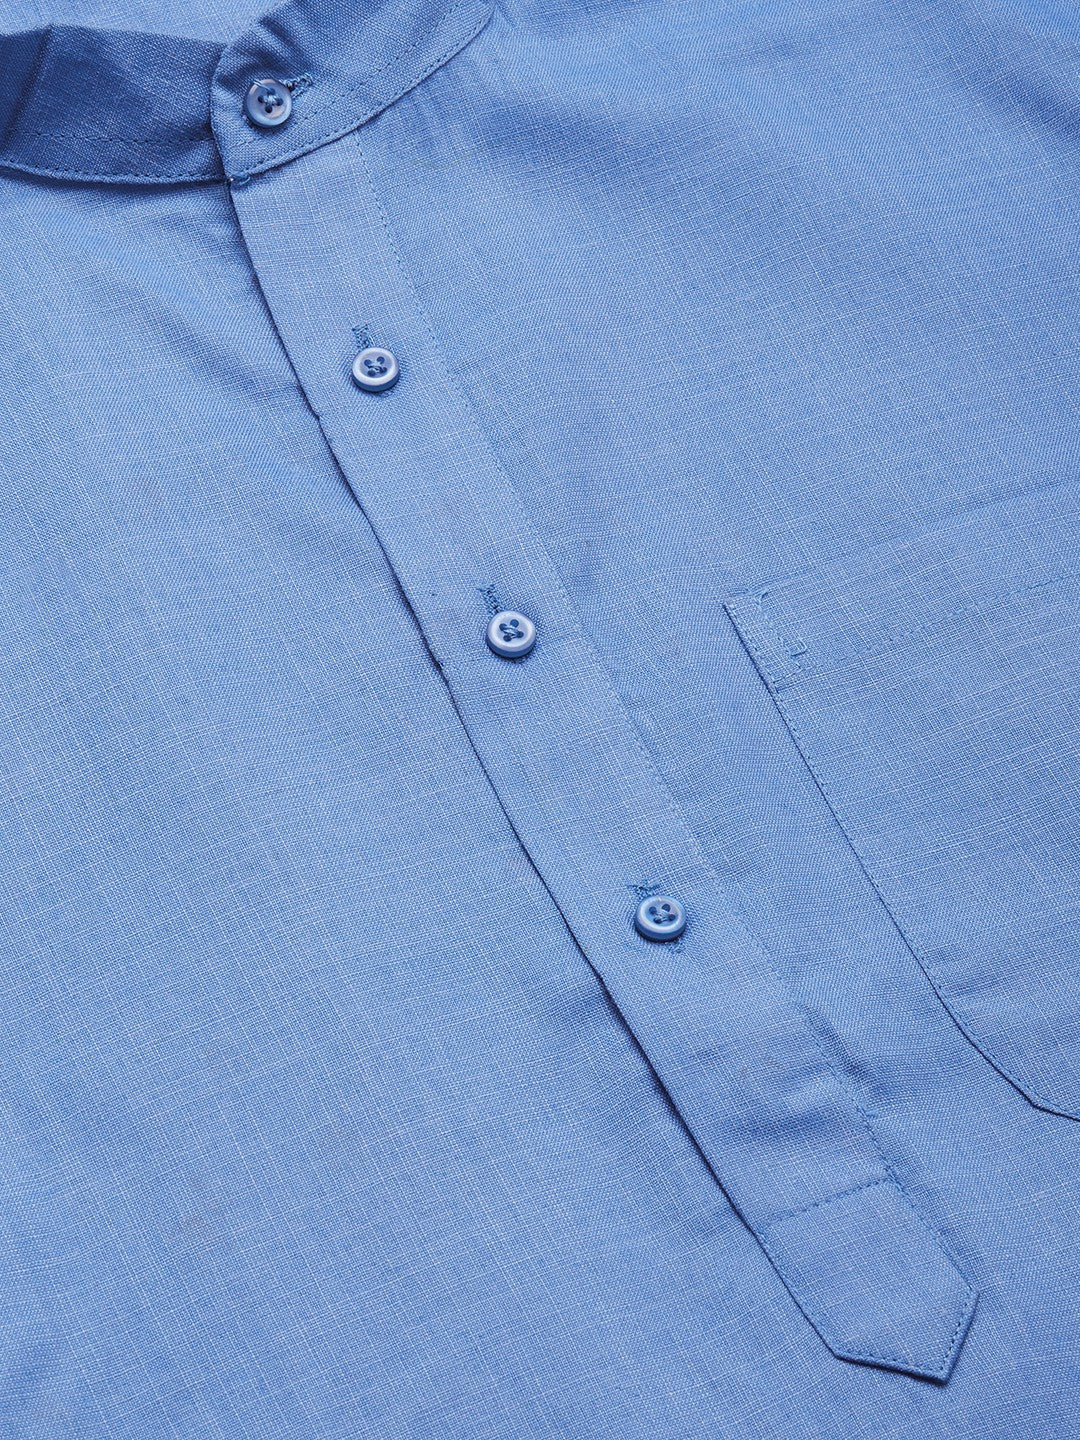 Men's Blue Cotton Solid Kurta Only ( KO 611 Blue ) - Virat Fashions